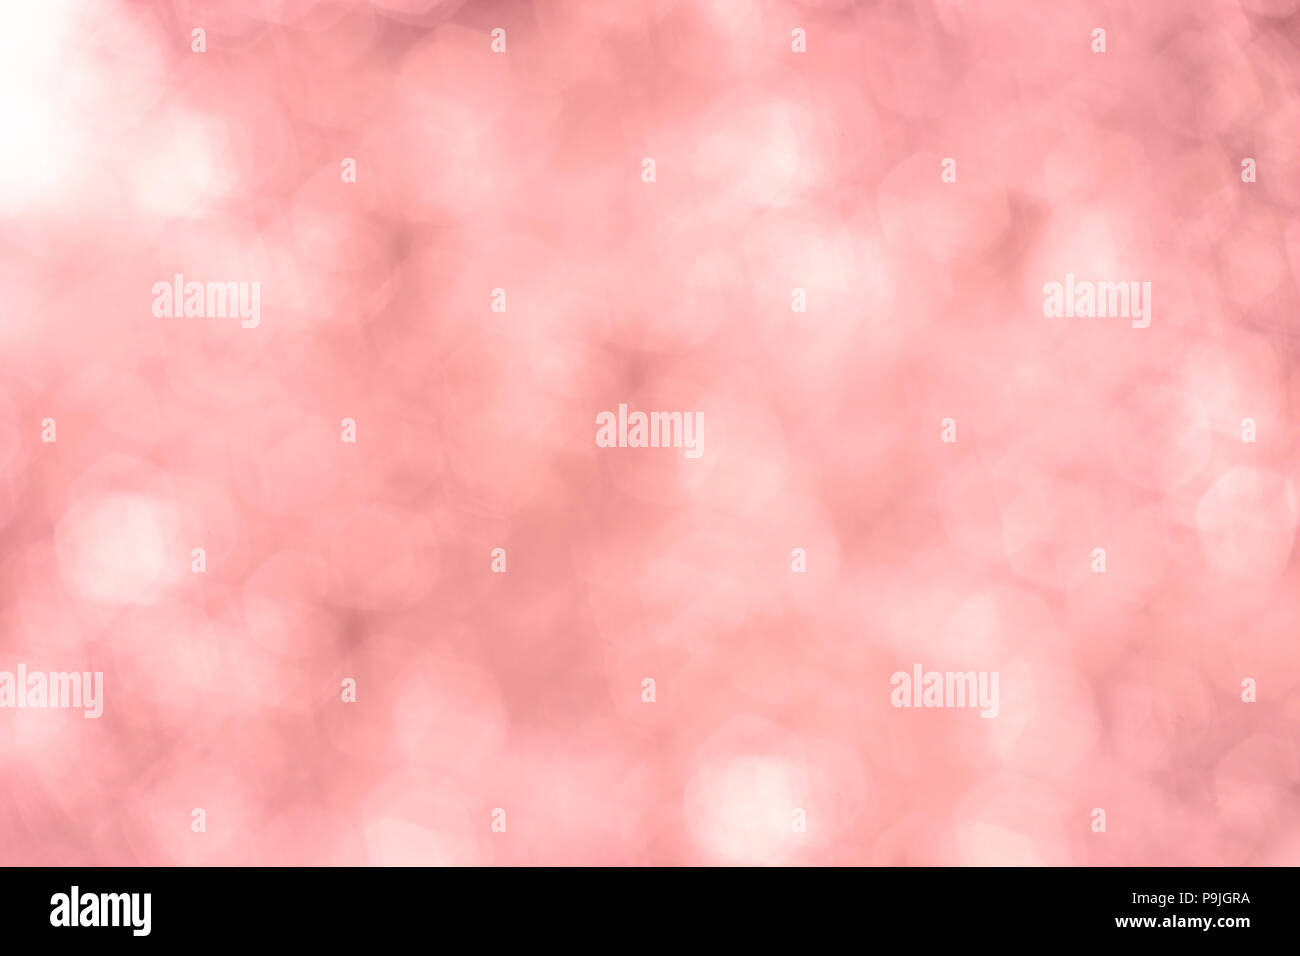 https://c8.alamy.com/comp/P9JGRA/vintage-blurred-bokeh-rose-pink-soft-pastel-background-P9JGRA.jpg